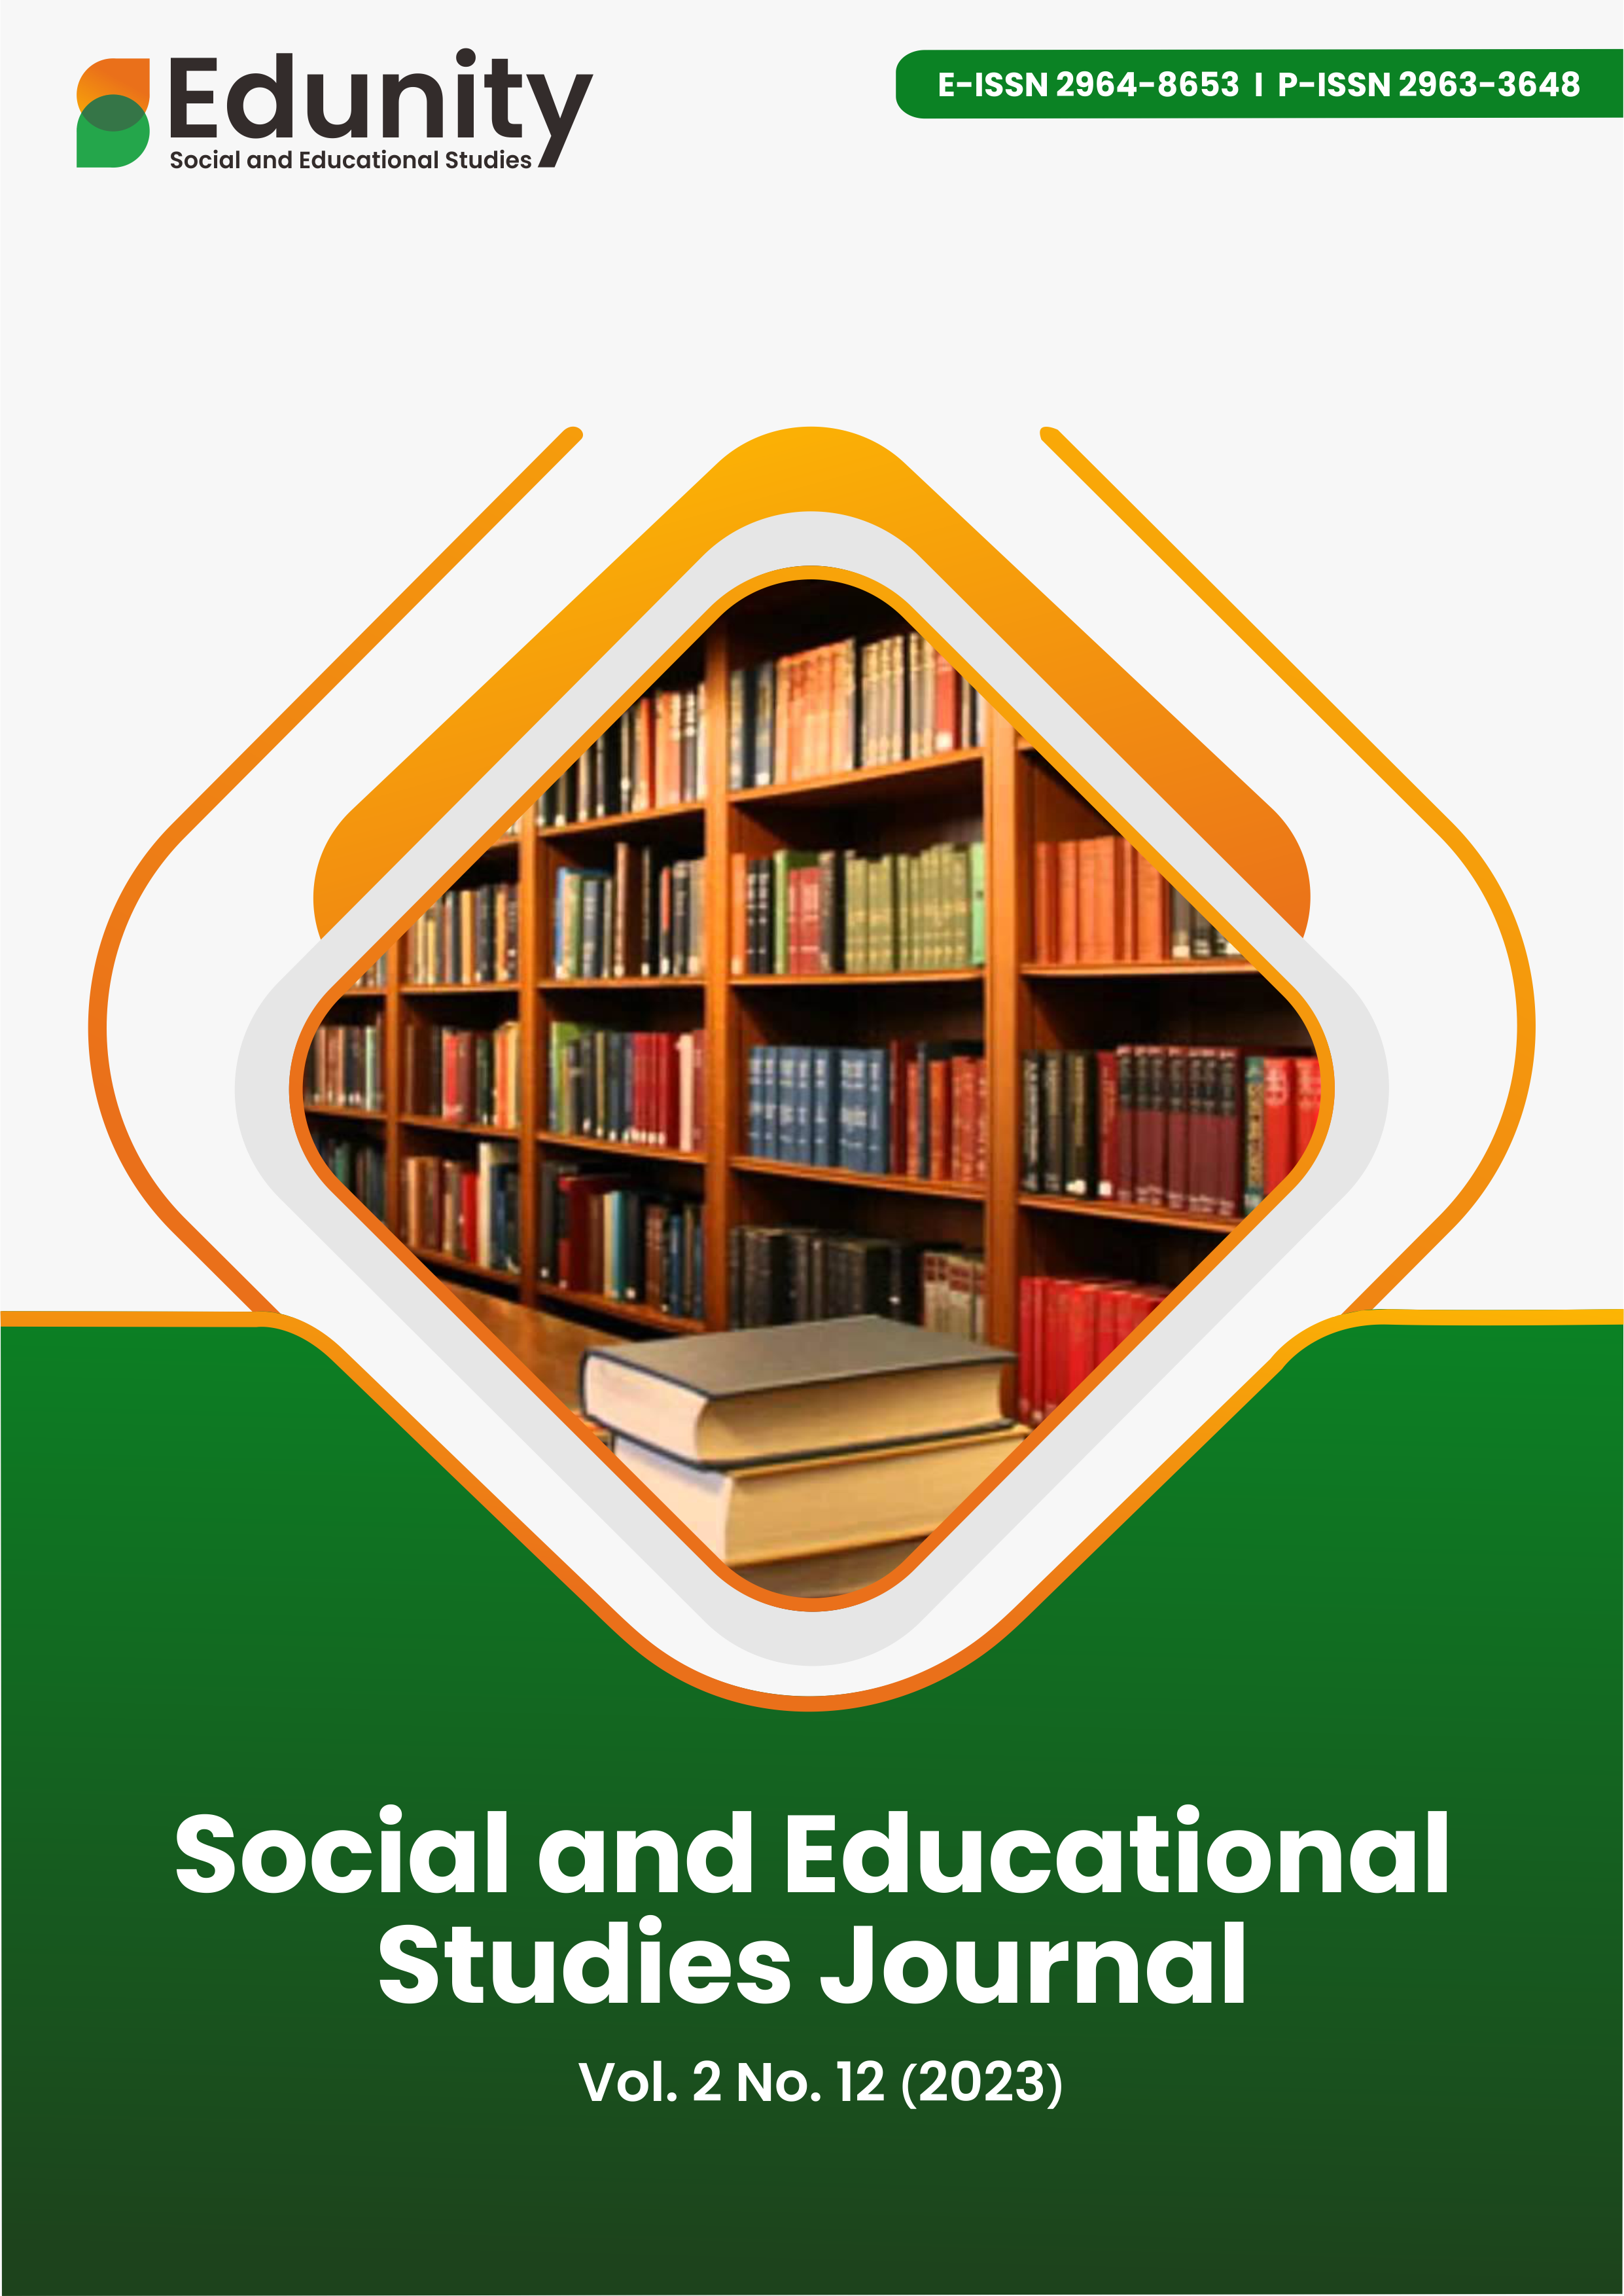 					View Vol. 2 No. 12 (2023): Edunity : Social and Educational Studies
				